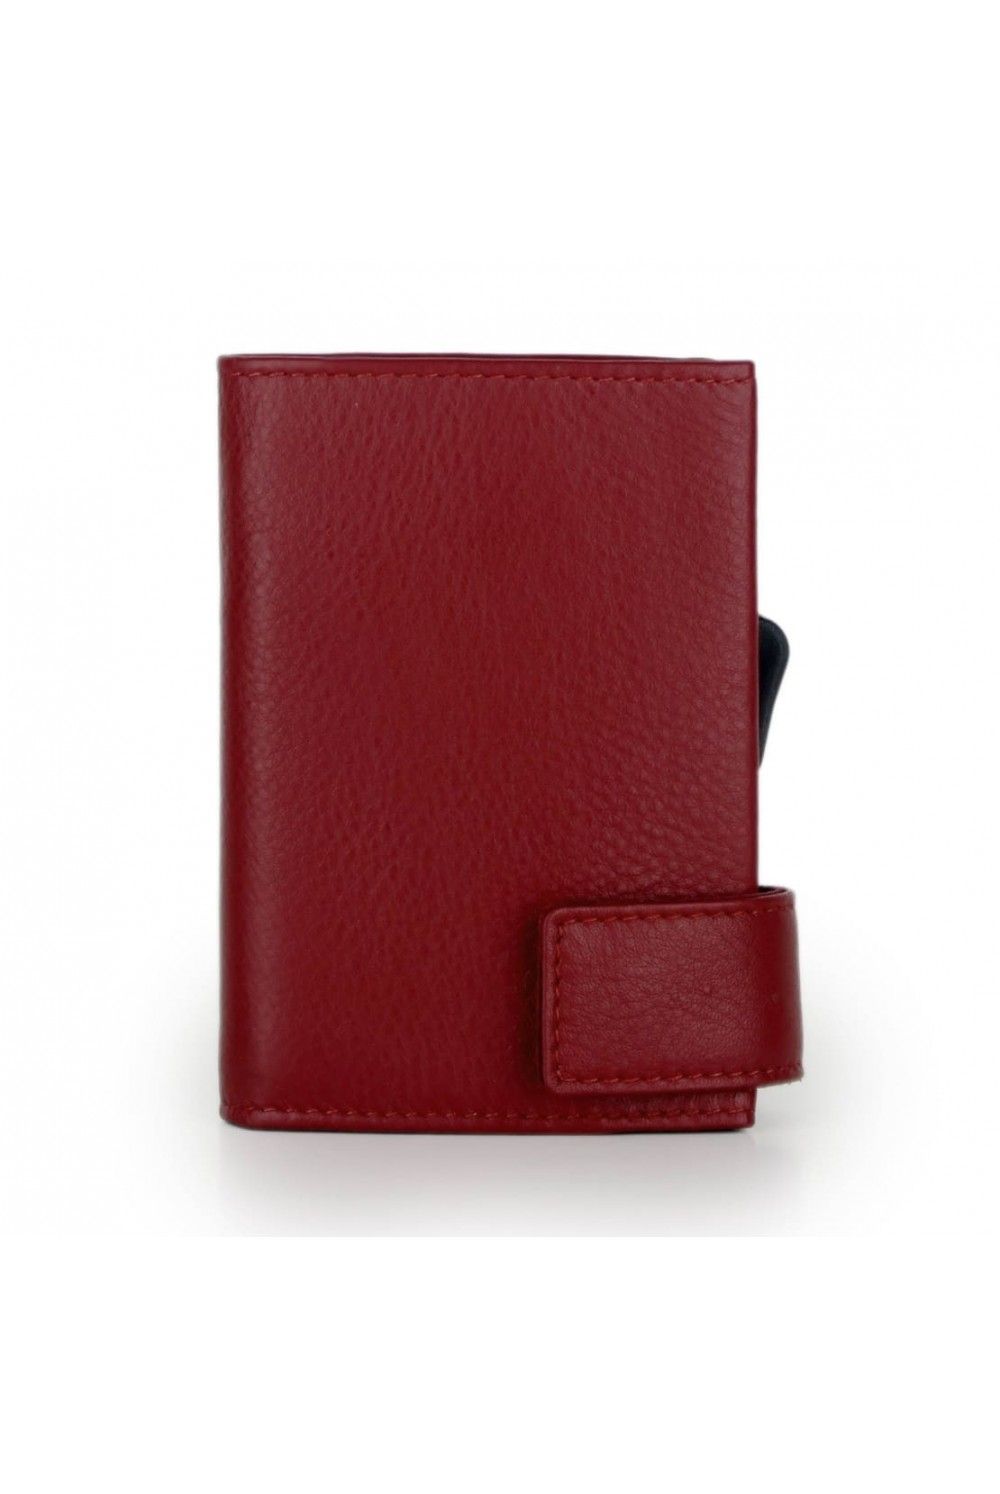 Porte-cartes SecWal DK Leather Rouge fonce